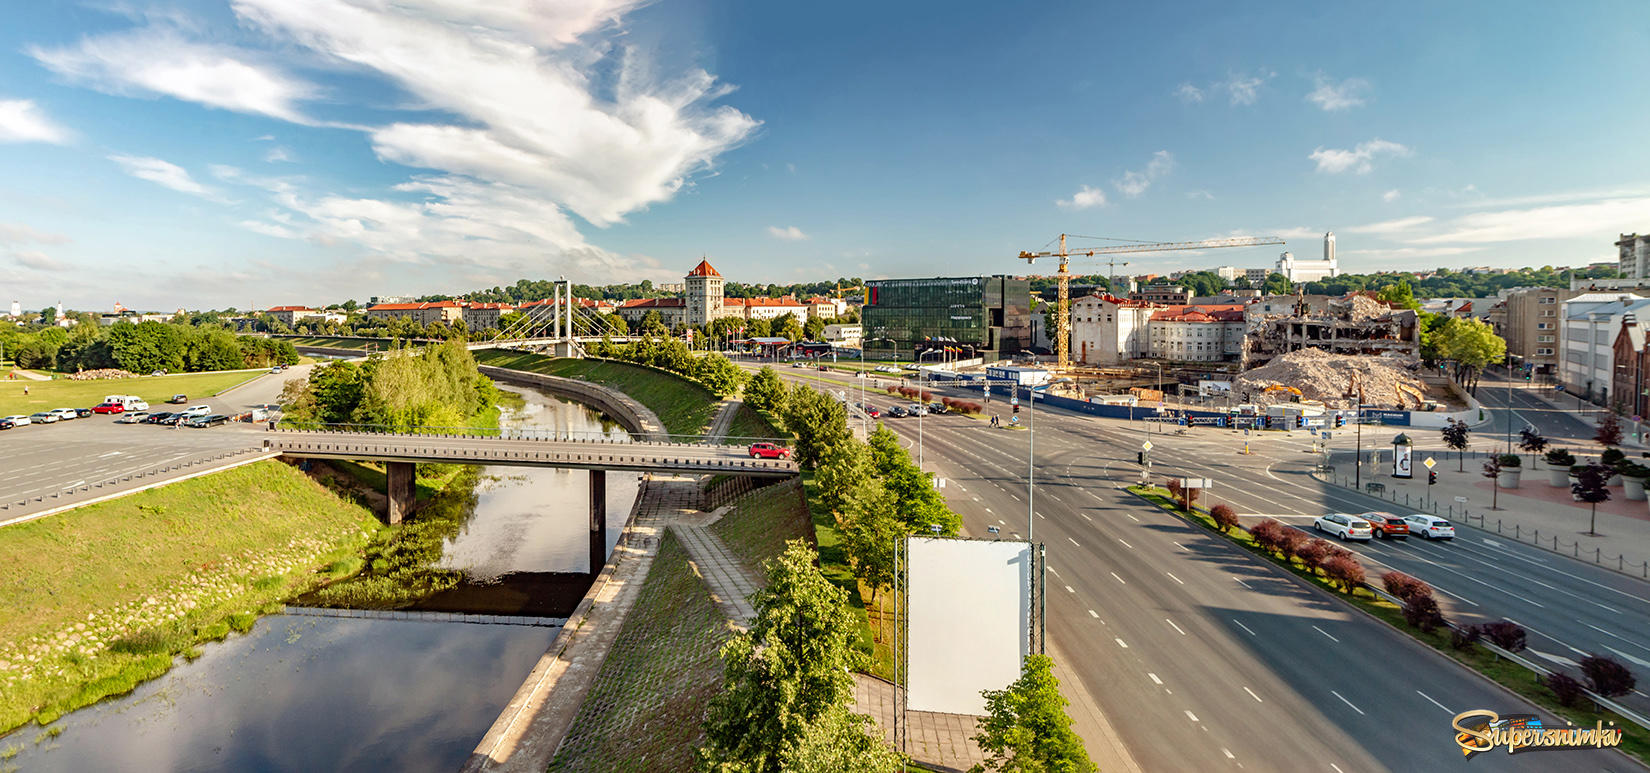 Панорама города Каунаса